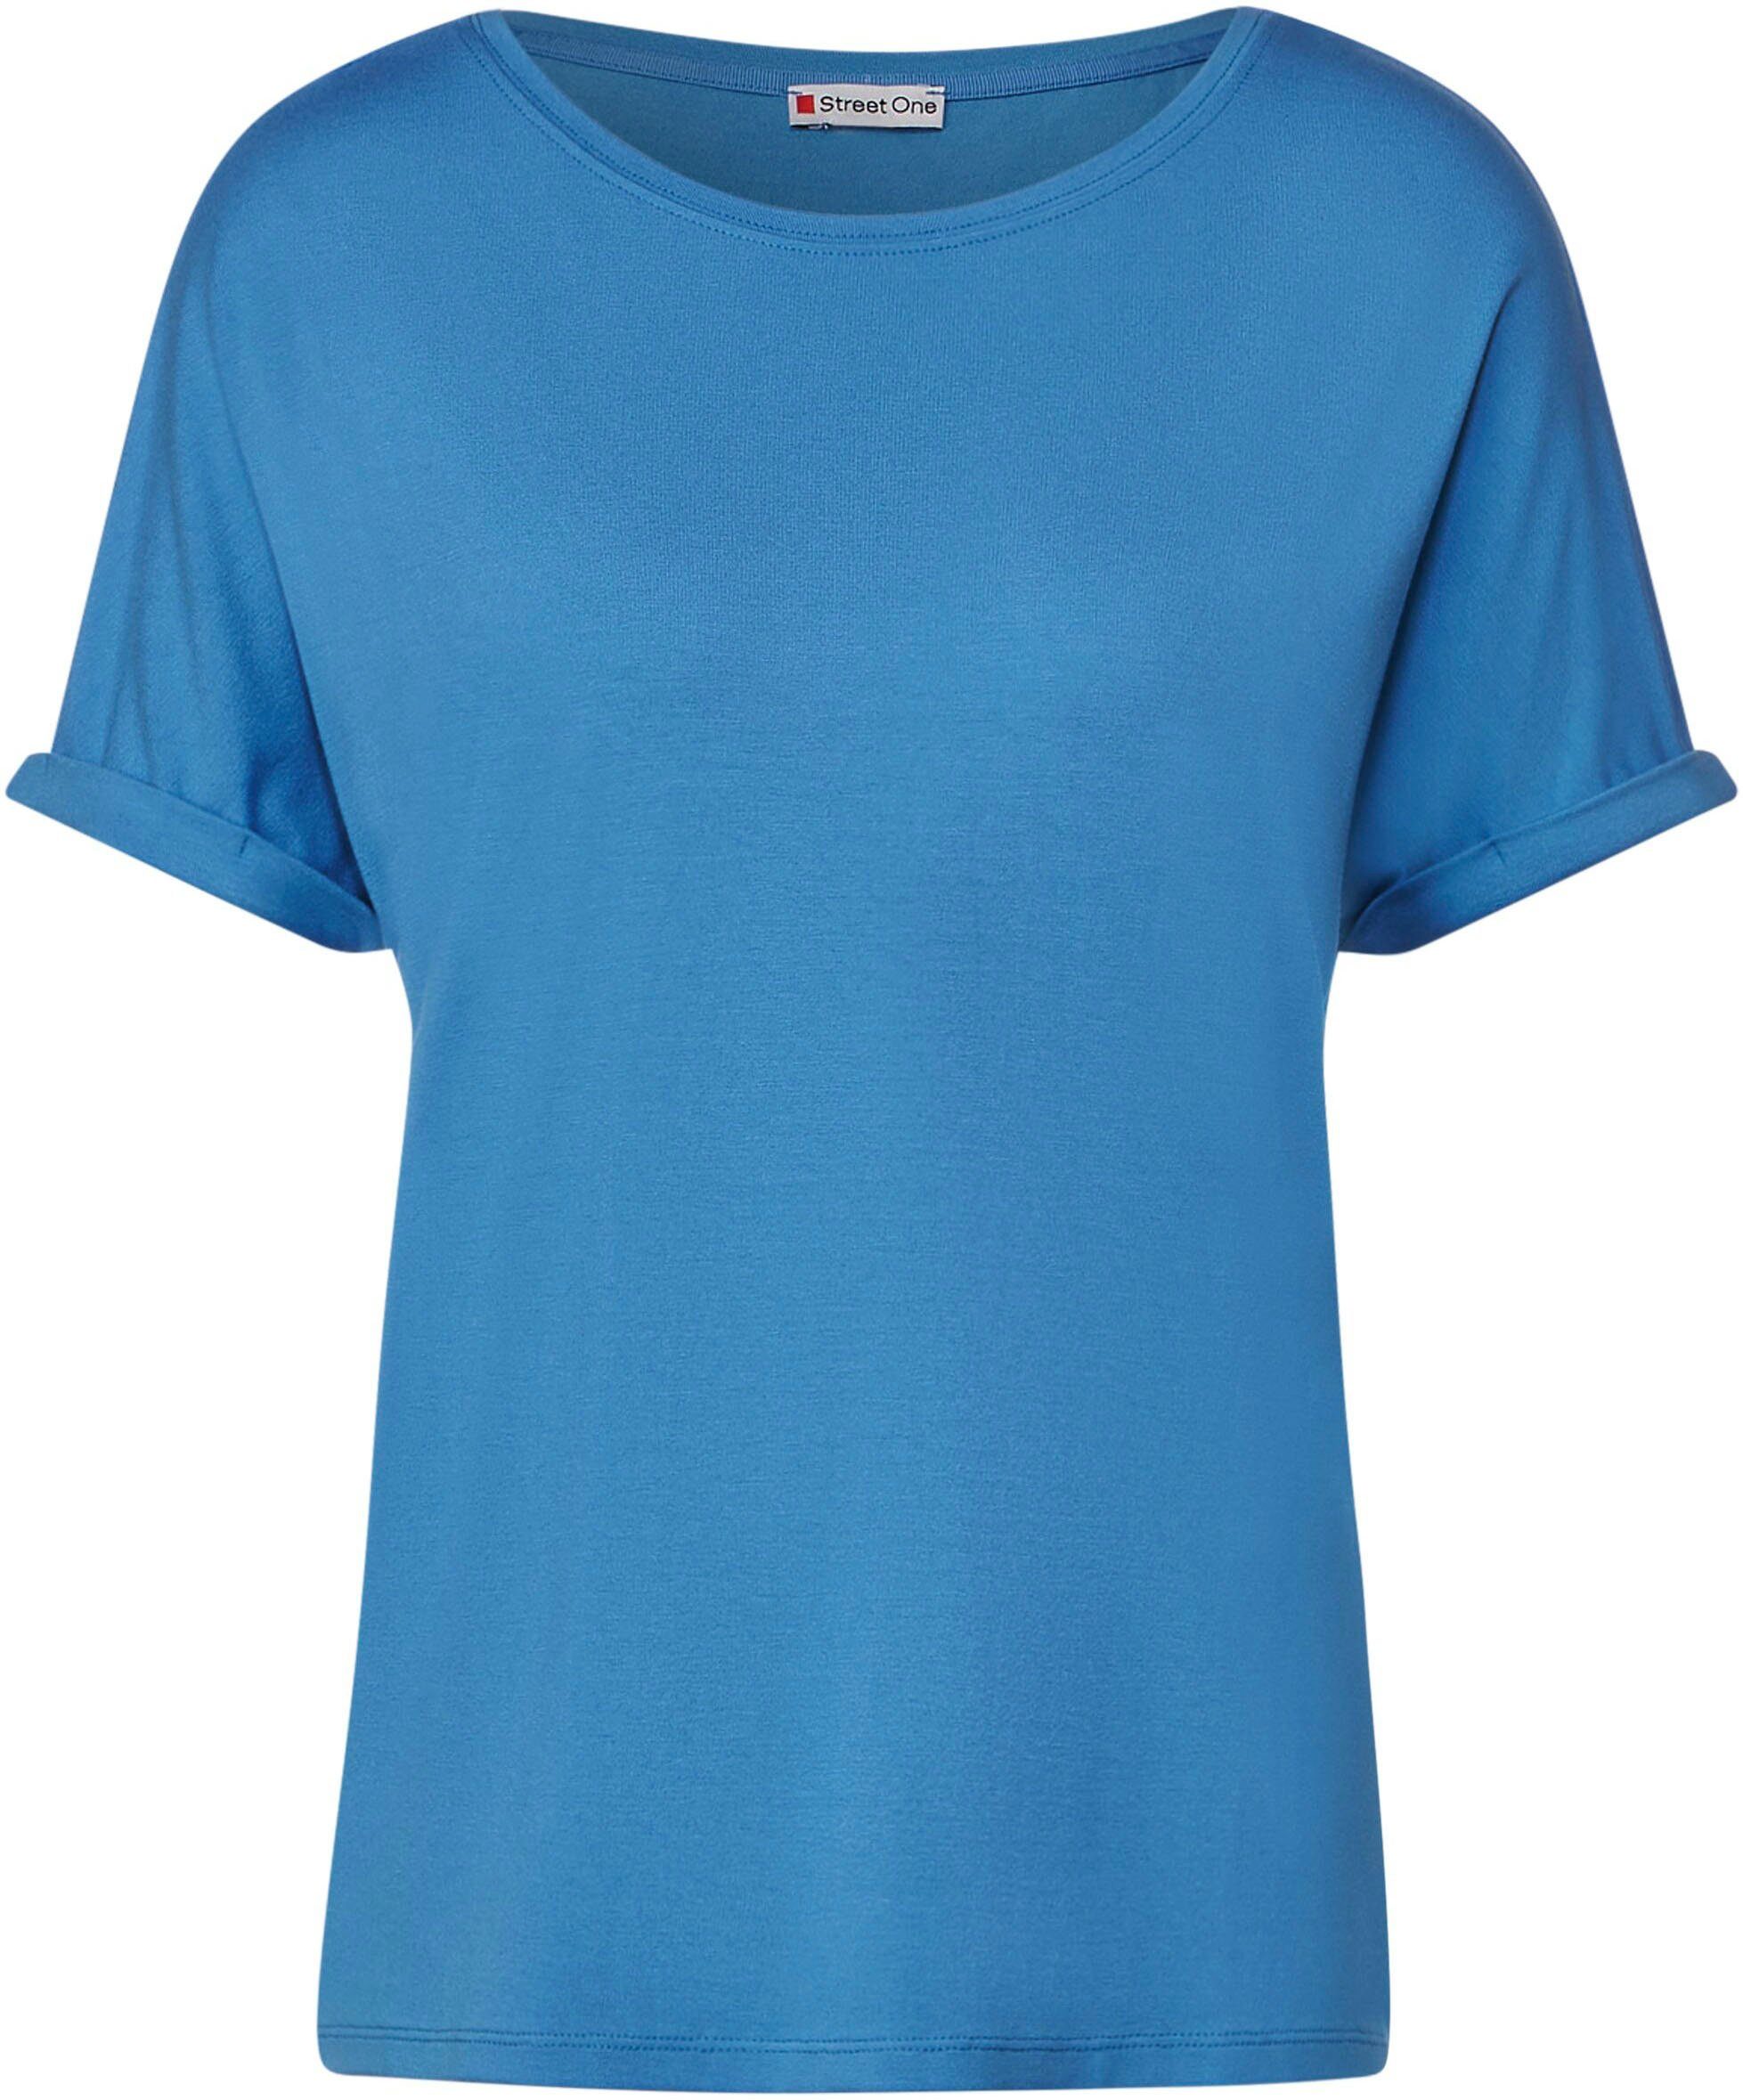 STREET ONE T-Shirt im Crista bay Style blue